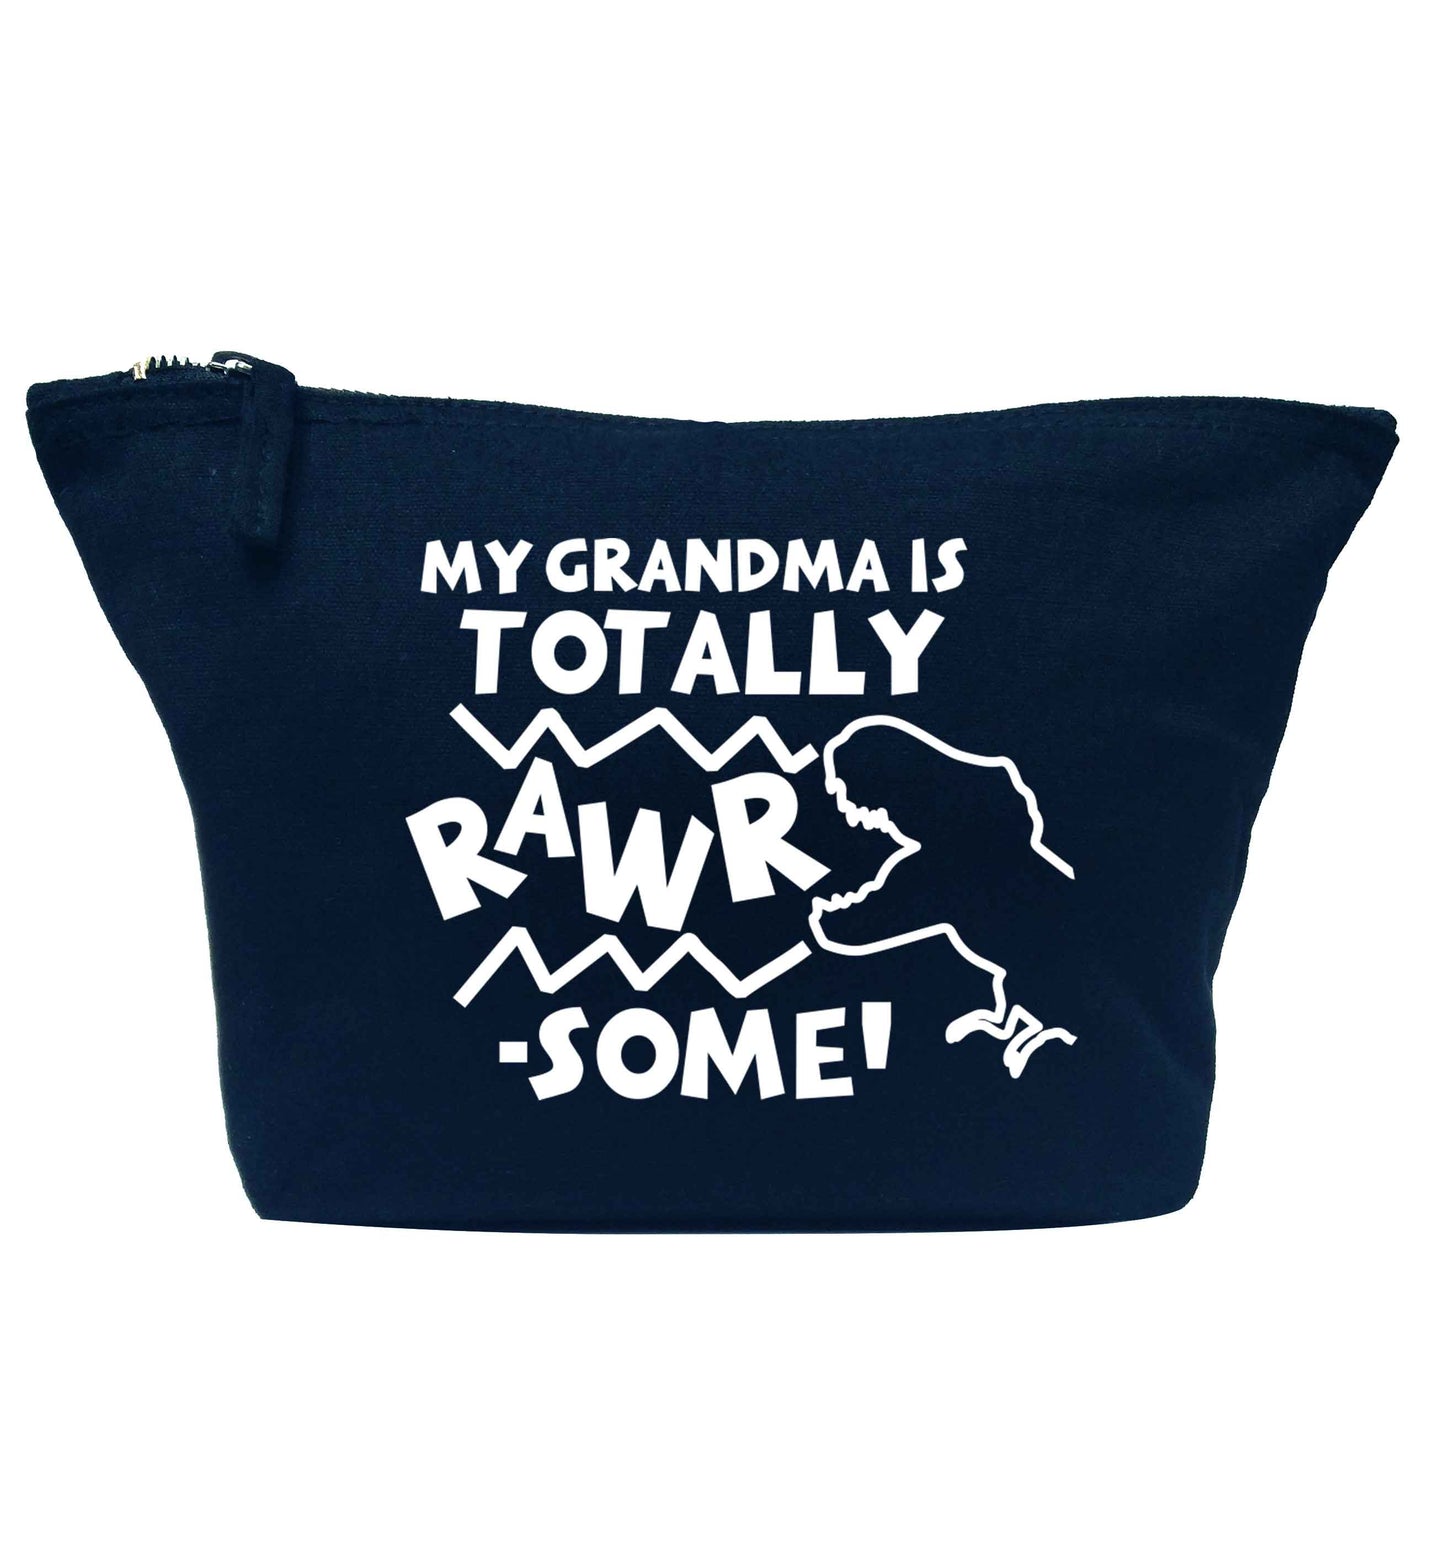 My grandma is totally rawrsome navy makeup bag